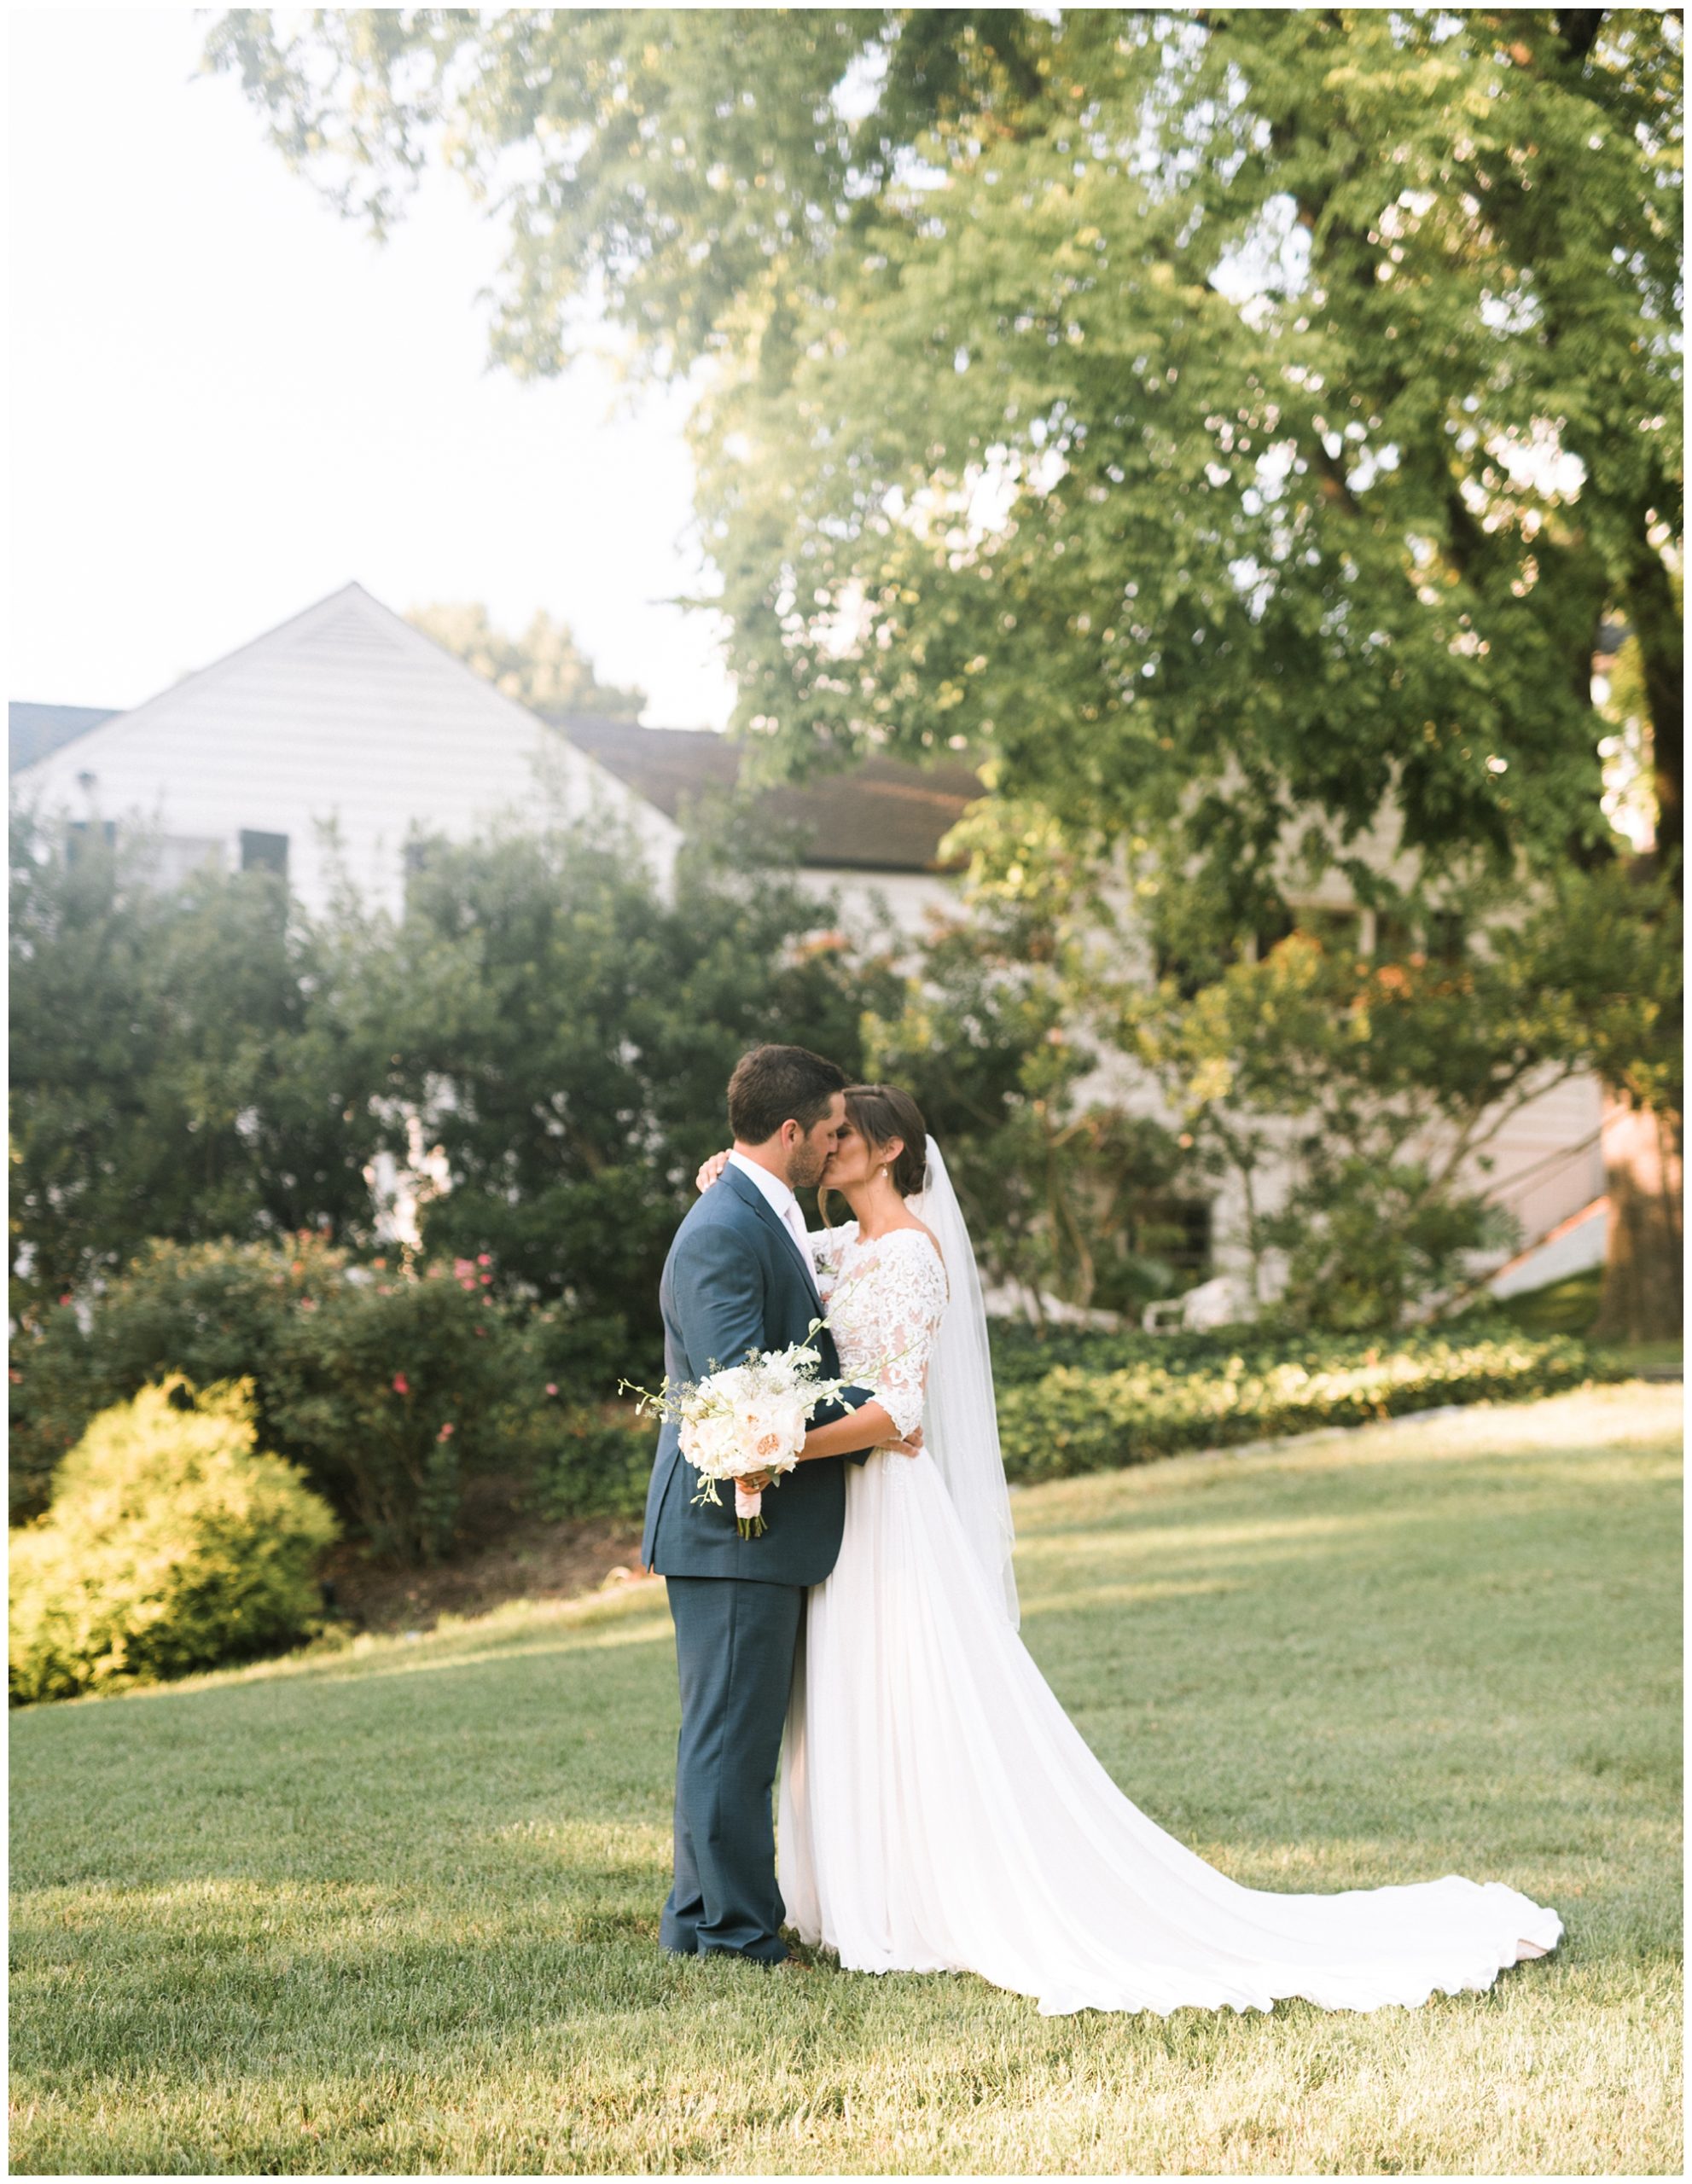 Intimate backyard wedding in Richmond Virginia